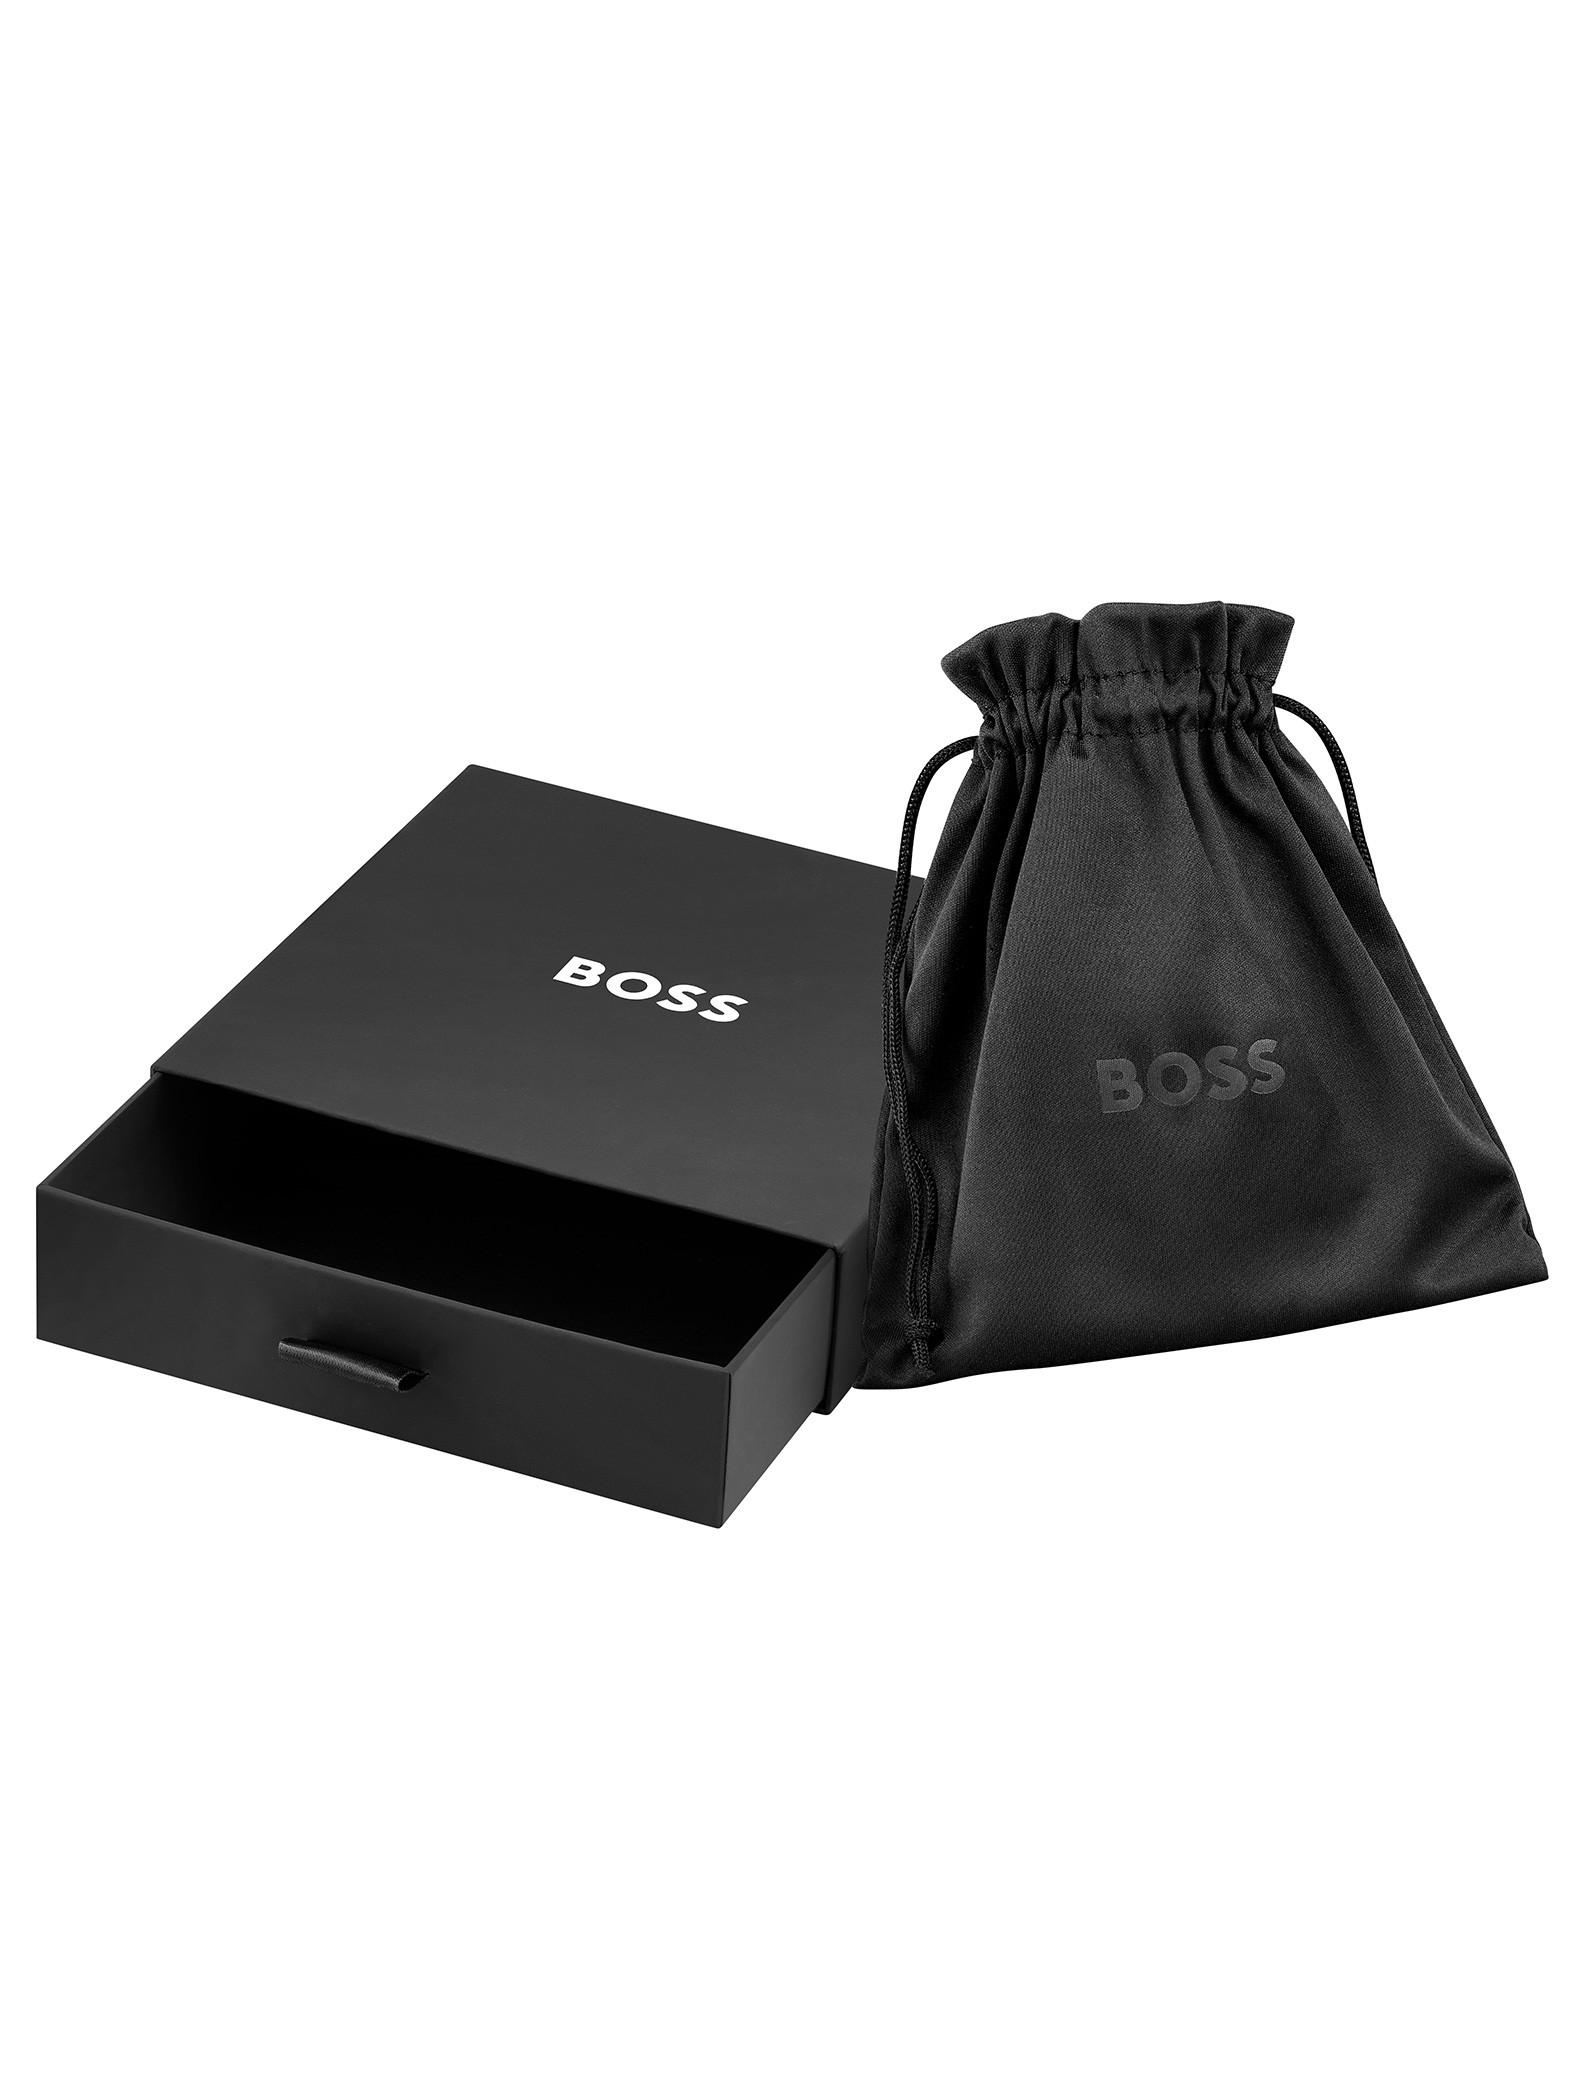 BOSS by HUGO BOSS Kassy Chain Necklace in White for Men | Lyst